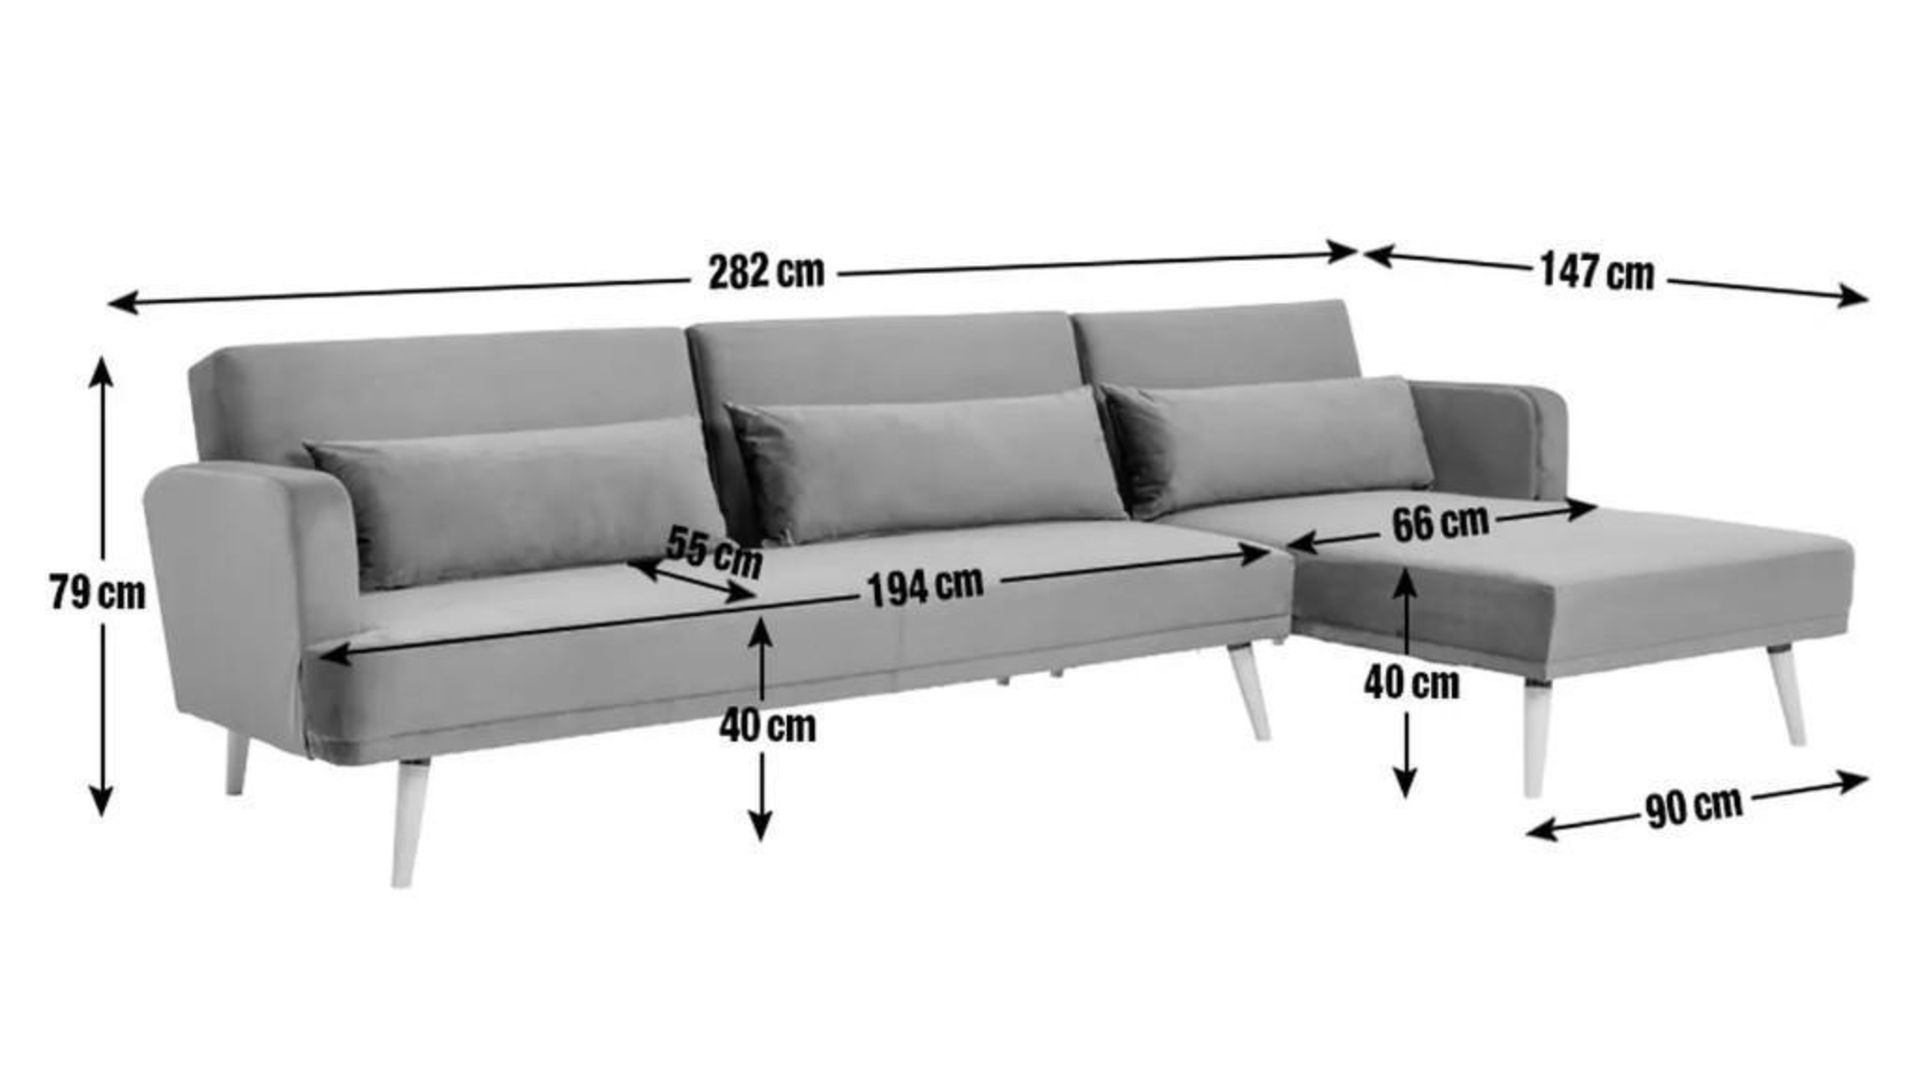 *EX DISPLAY* Habitat left hand facing clic clac corner sofa bed in grey. - Image 5 of 5